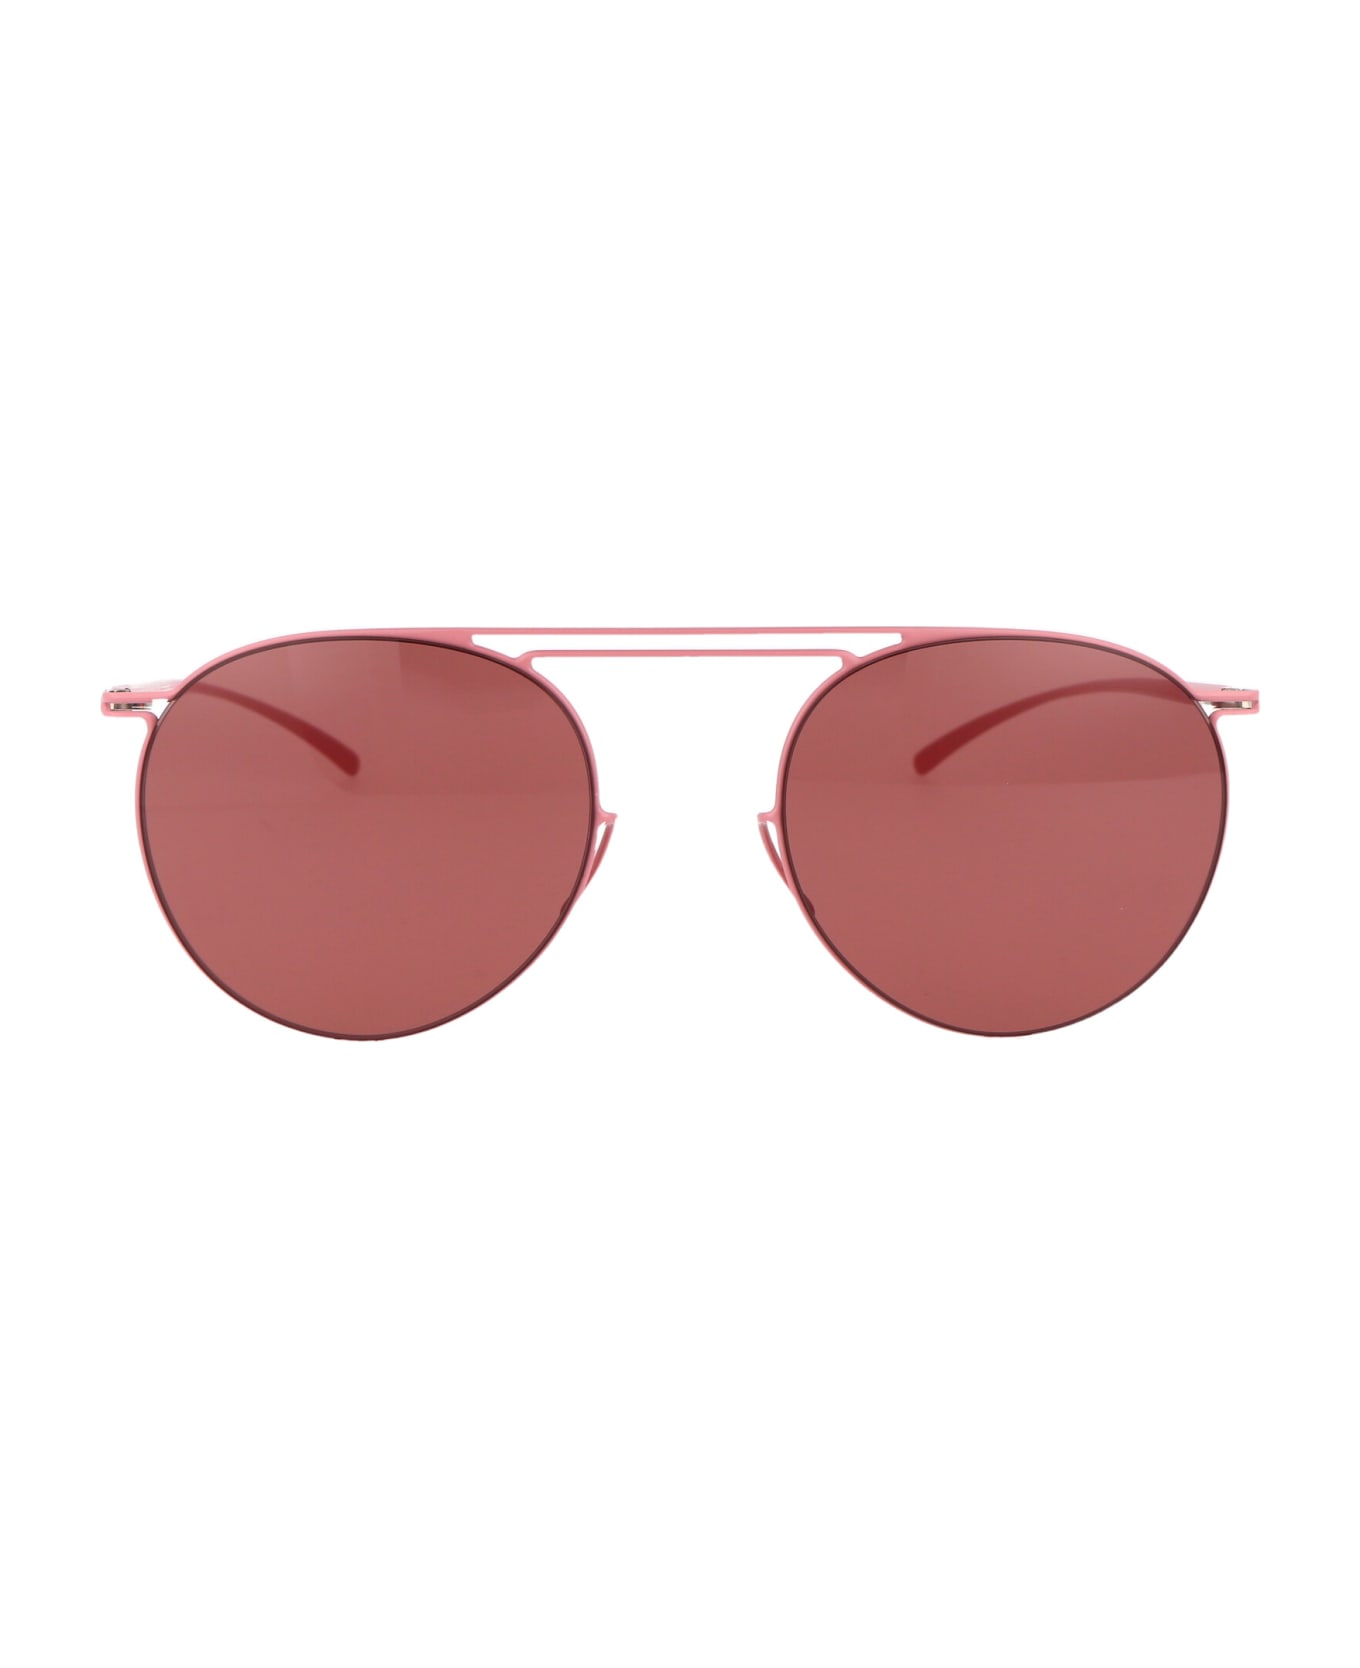 Mykita Mmesse009 Sunglasses - 415 E17 Candy Rose Purple Solid